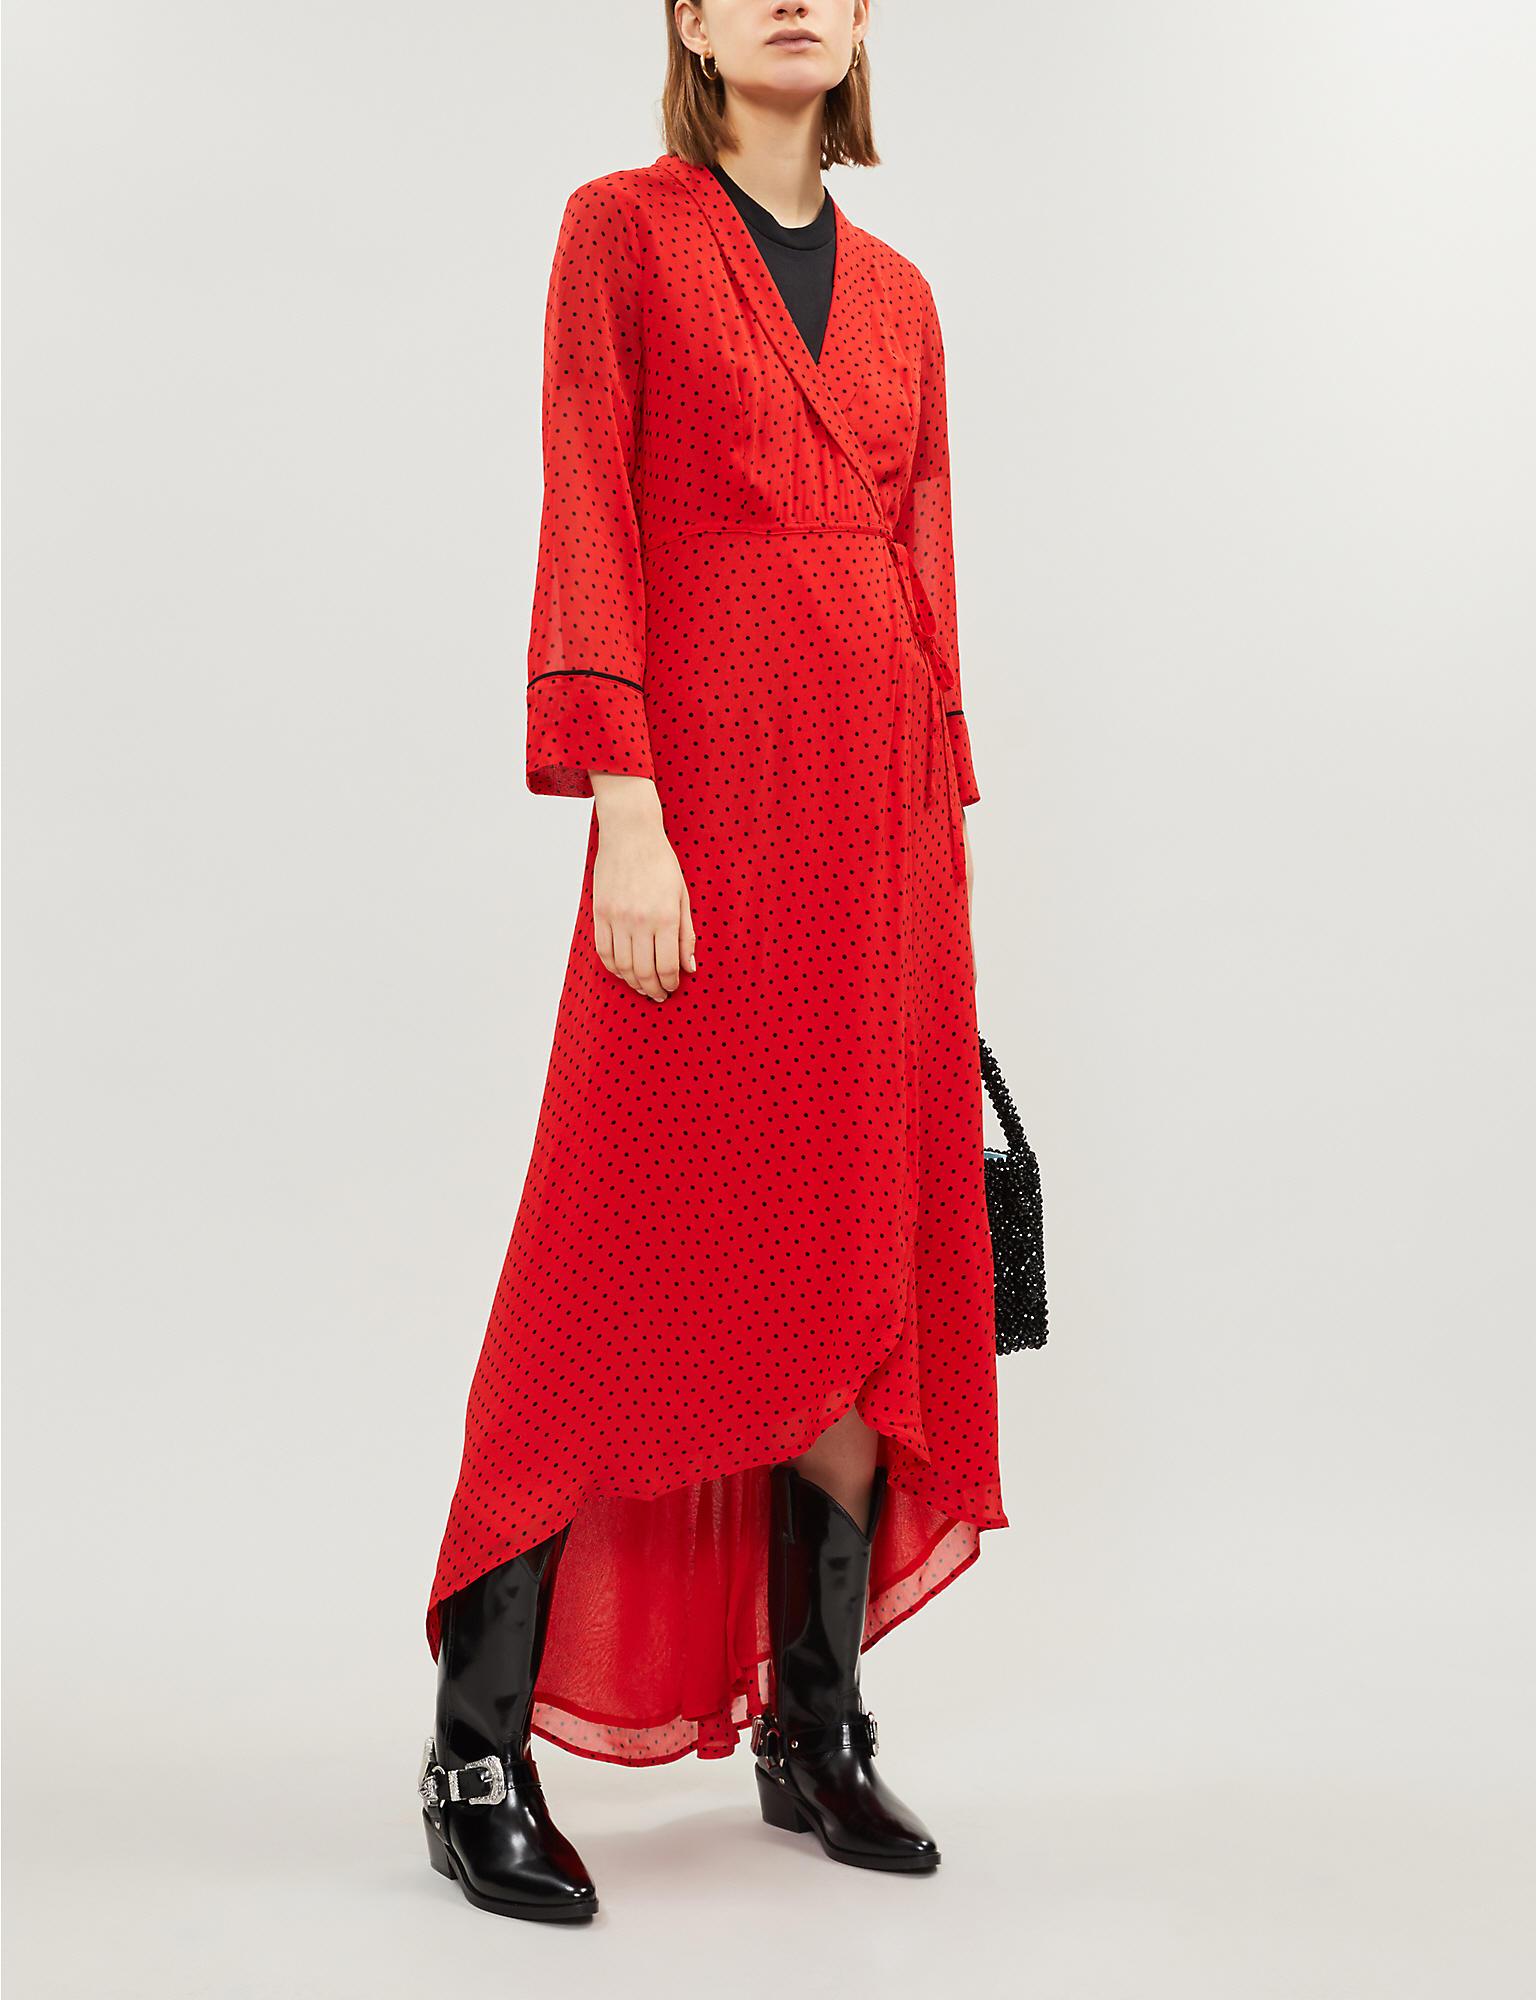 Ganni Mullin Georgette Dress in Red - Lyst